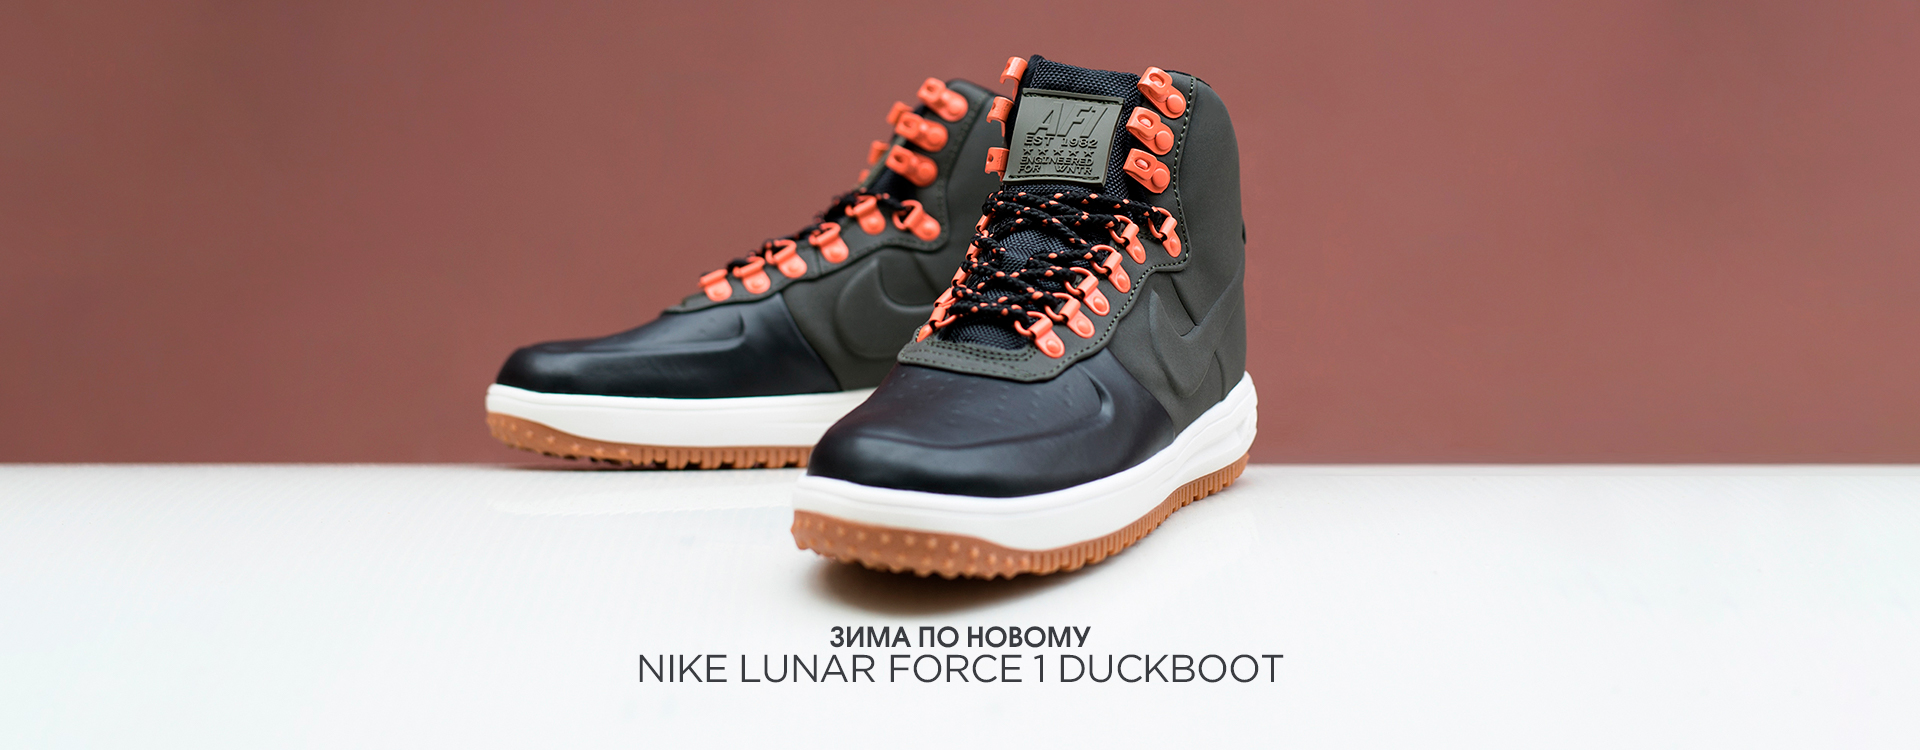 Кроссовки Nike Lunar Force 1 '18 Duckboot